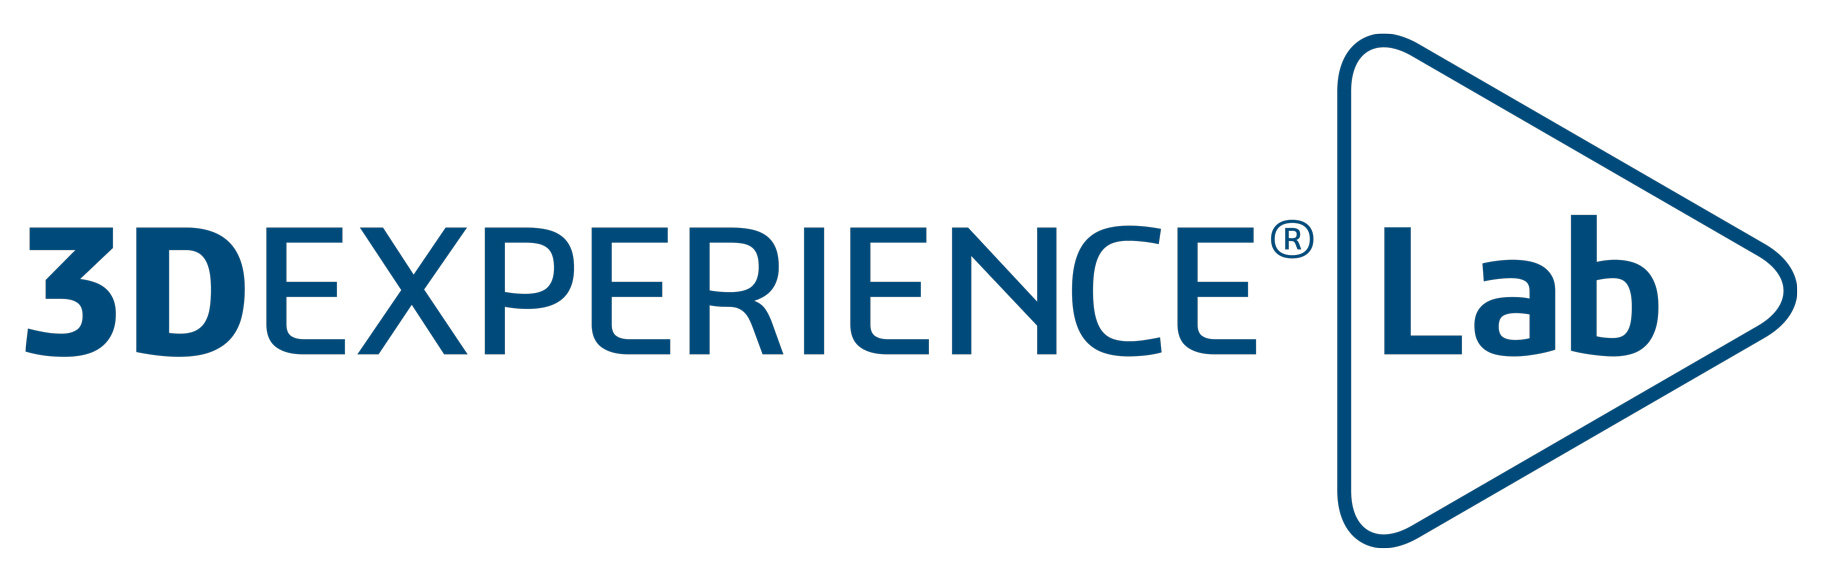 3dexperience lab logo